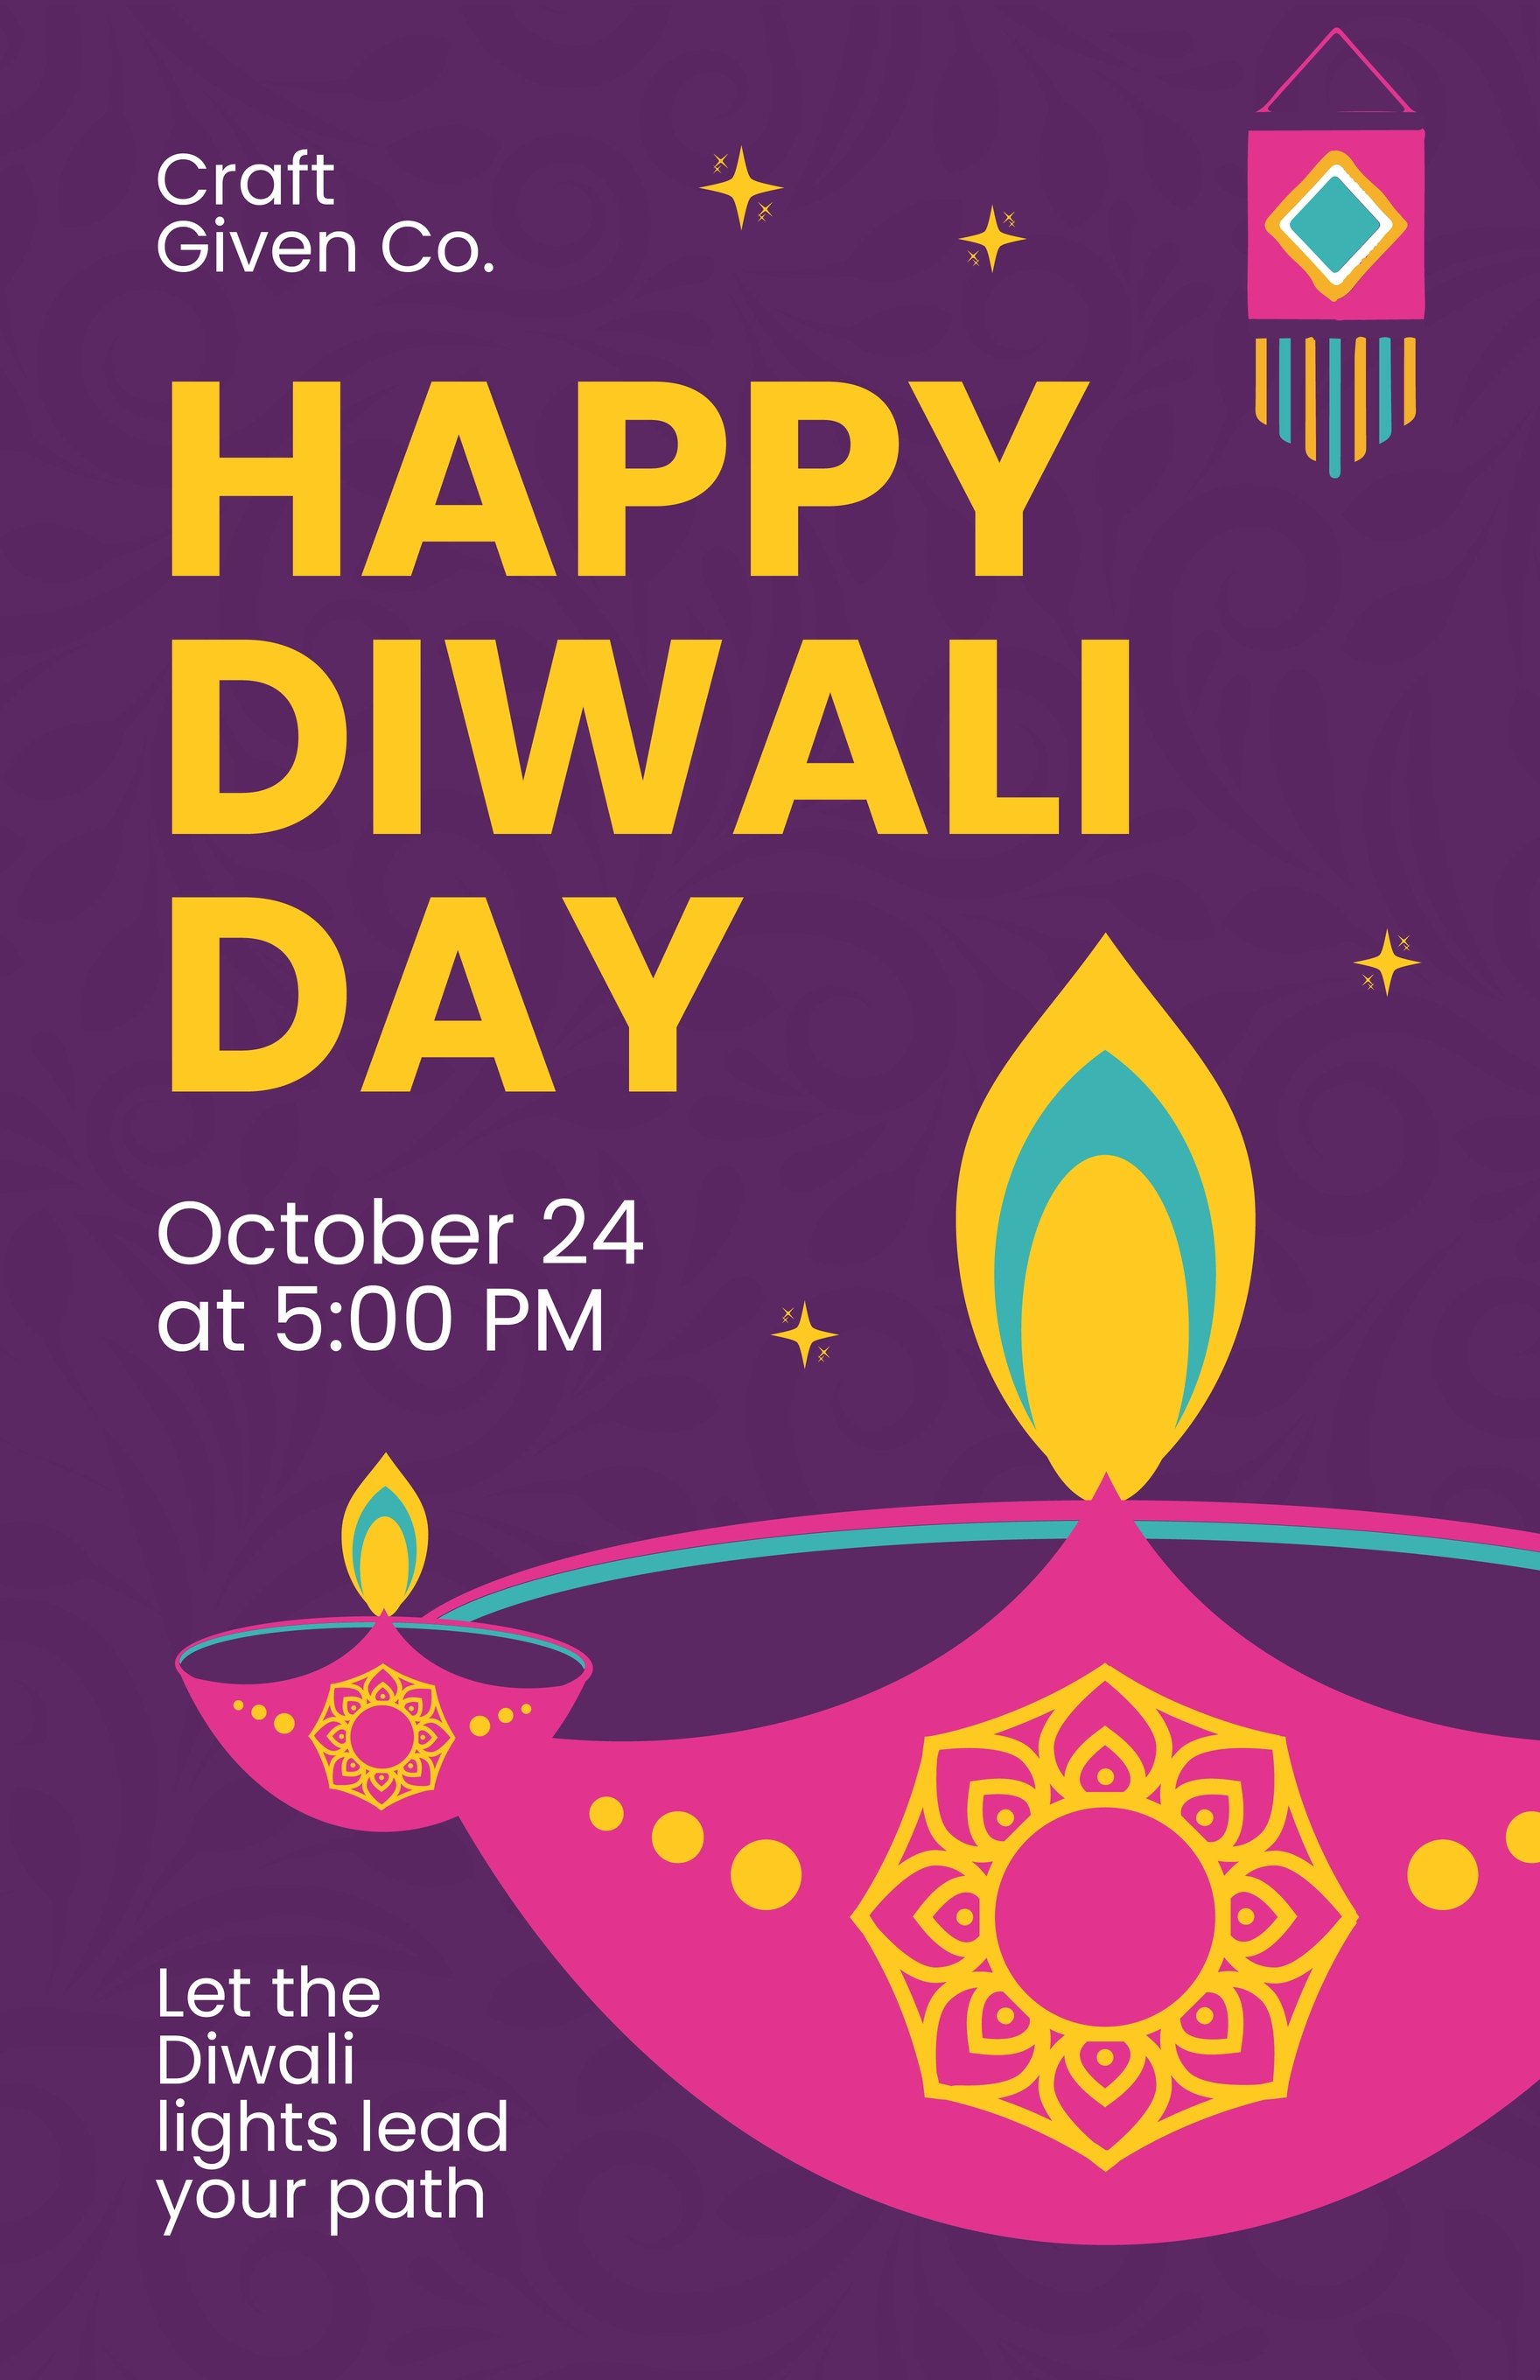 Free Diwali Day Poster in Word, Google Docs, Illustrator, PSD, Apple Pages, Publisher, EPS, SVG, JPG, PNG